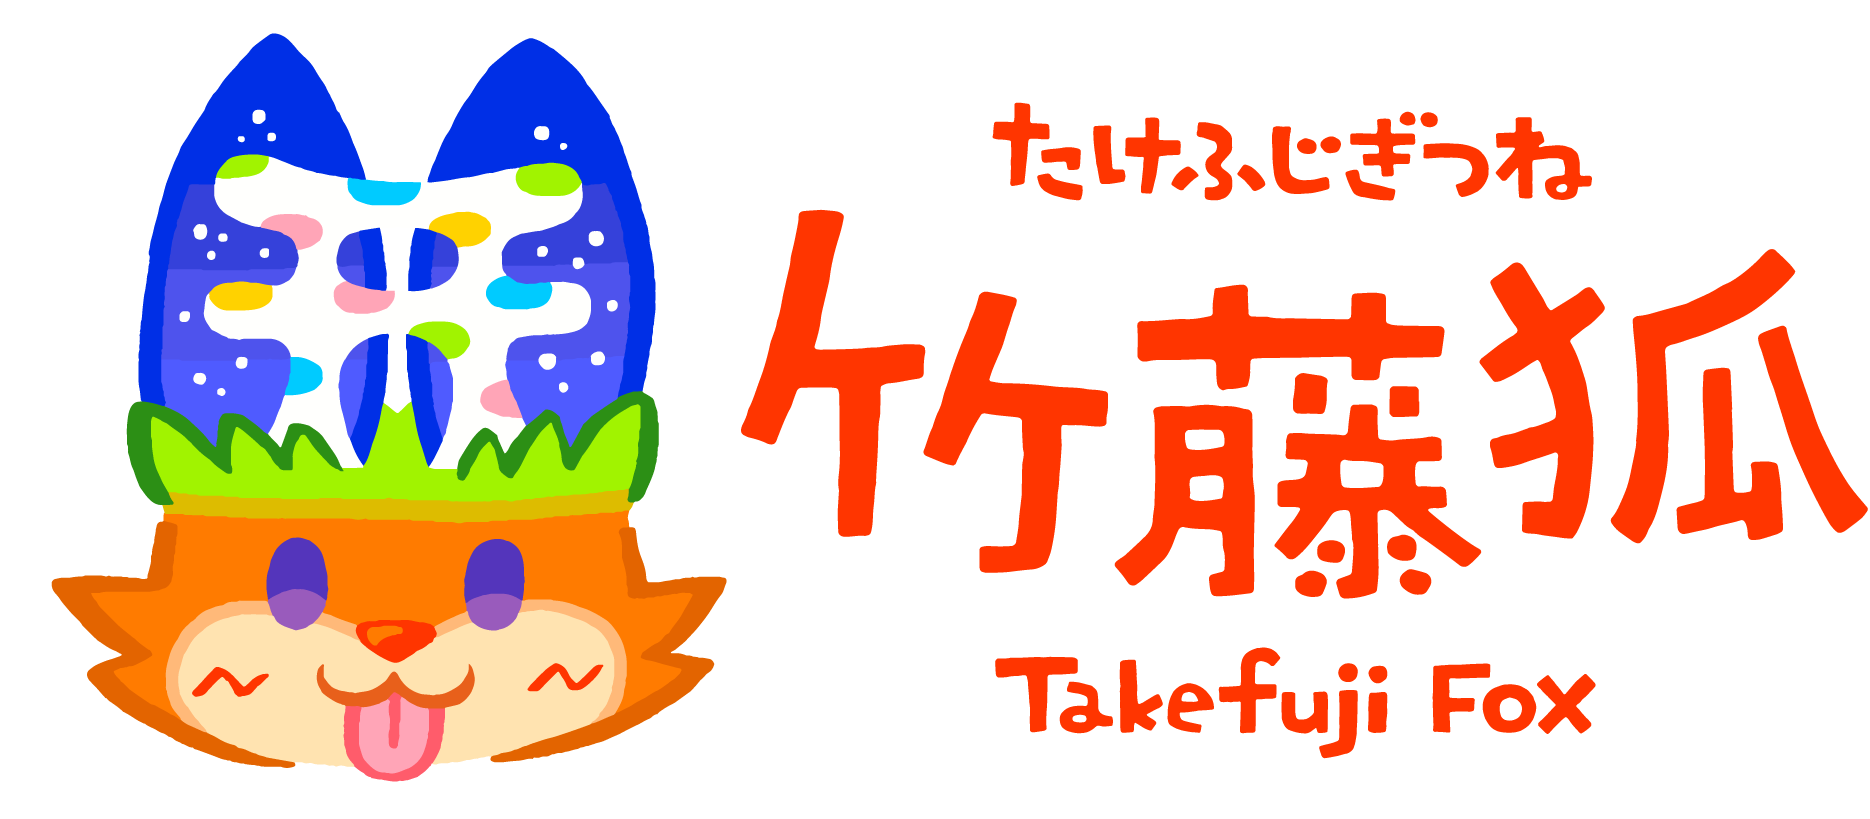 竹藤狐/Takefuji